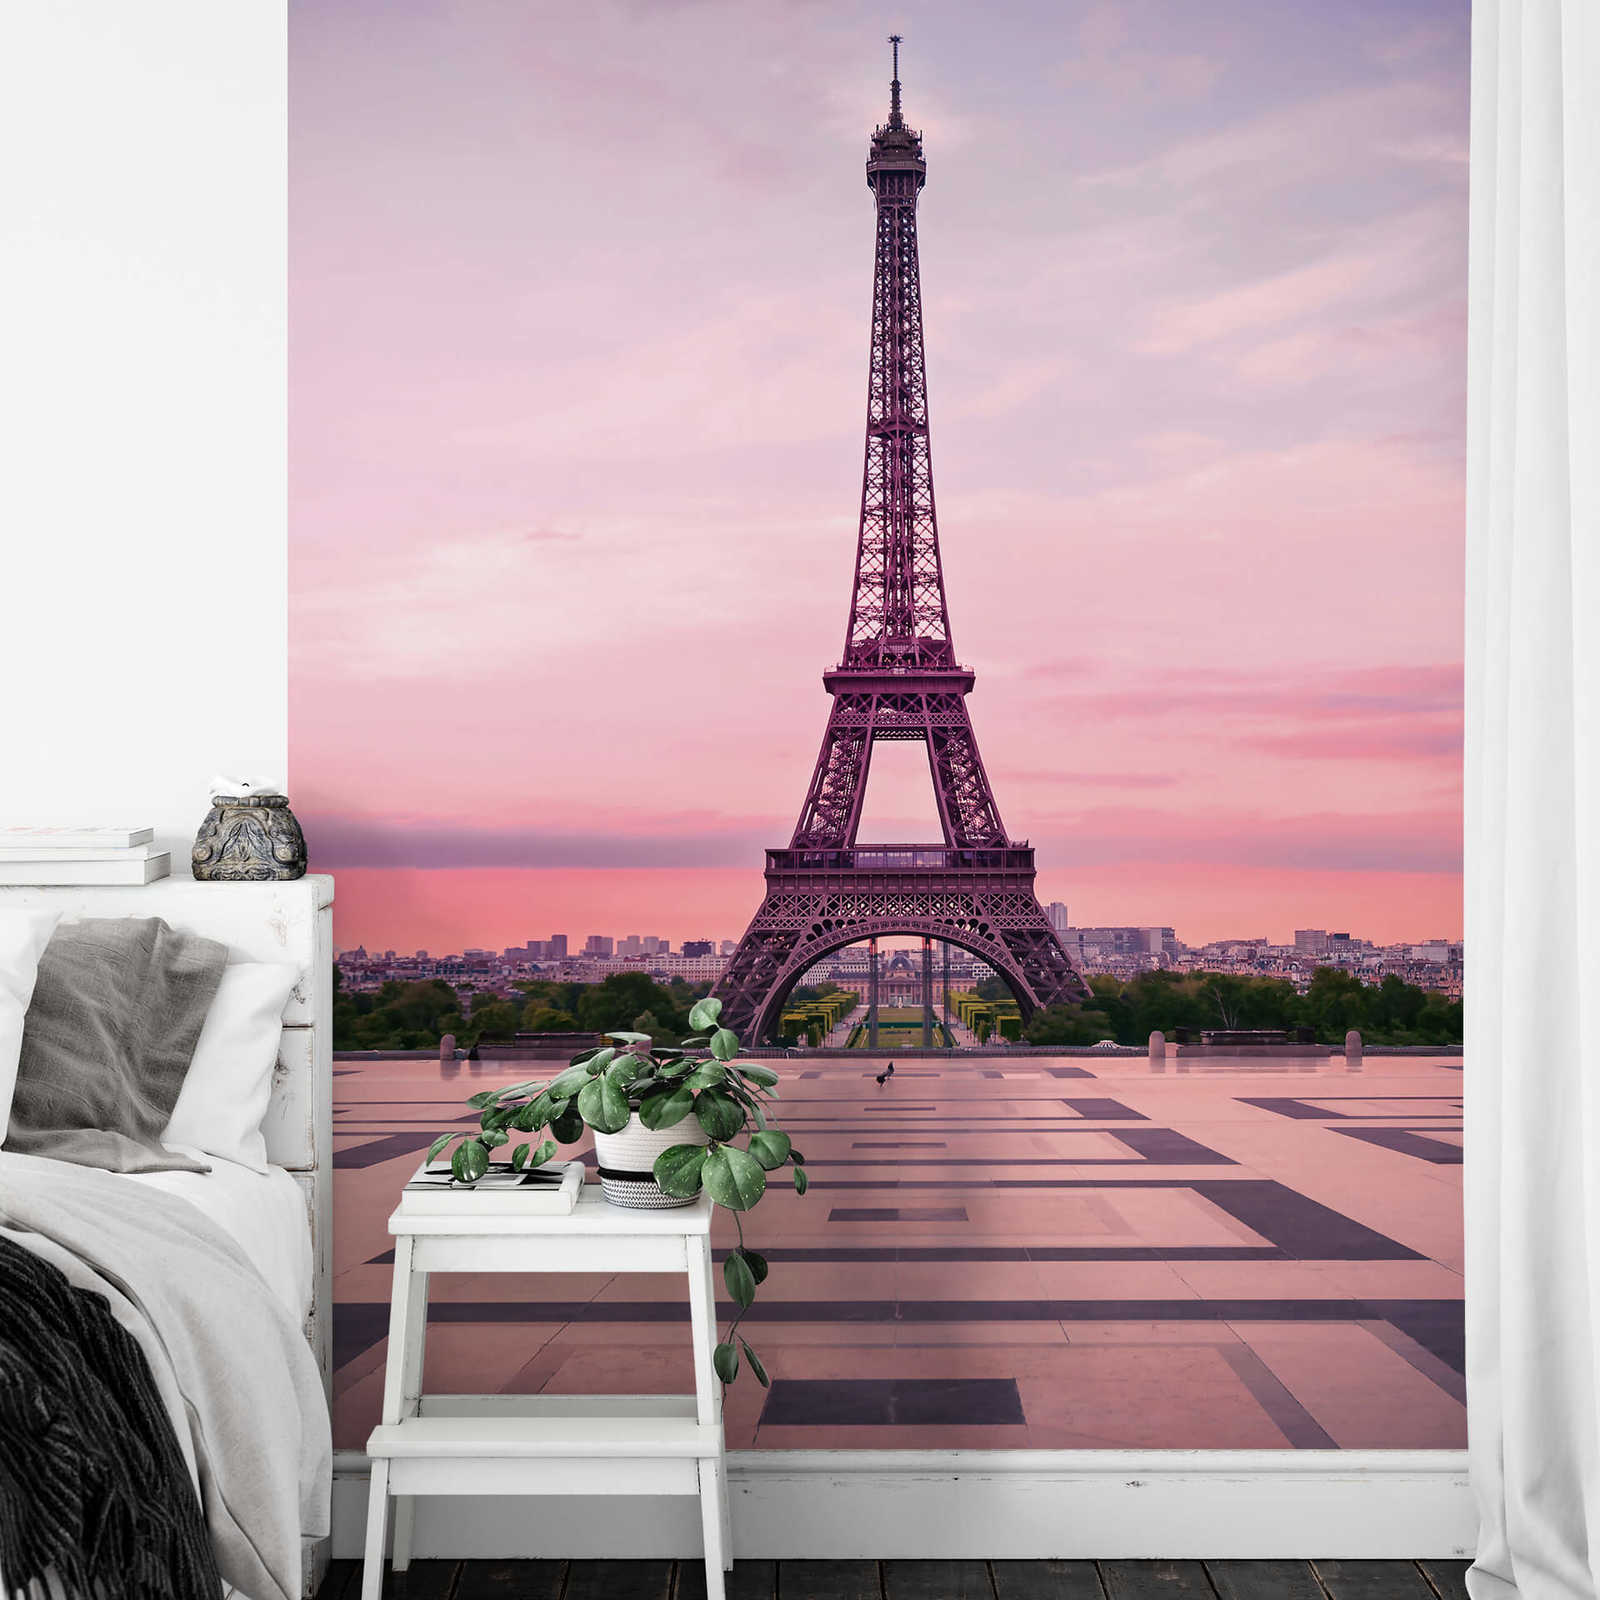             Eiffel Tower mural Paris at sunset
        